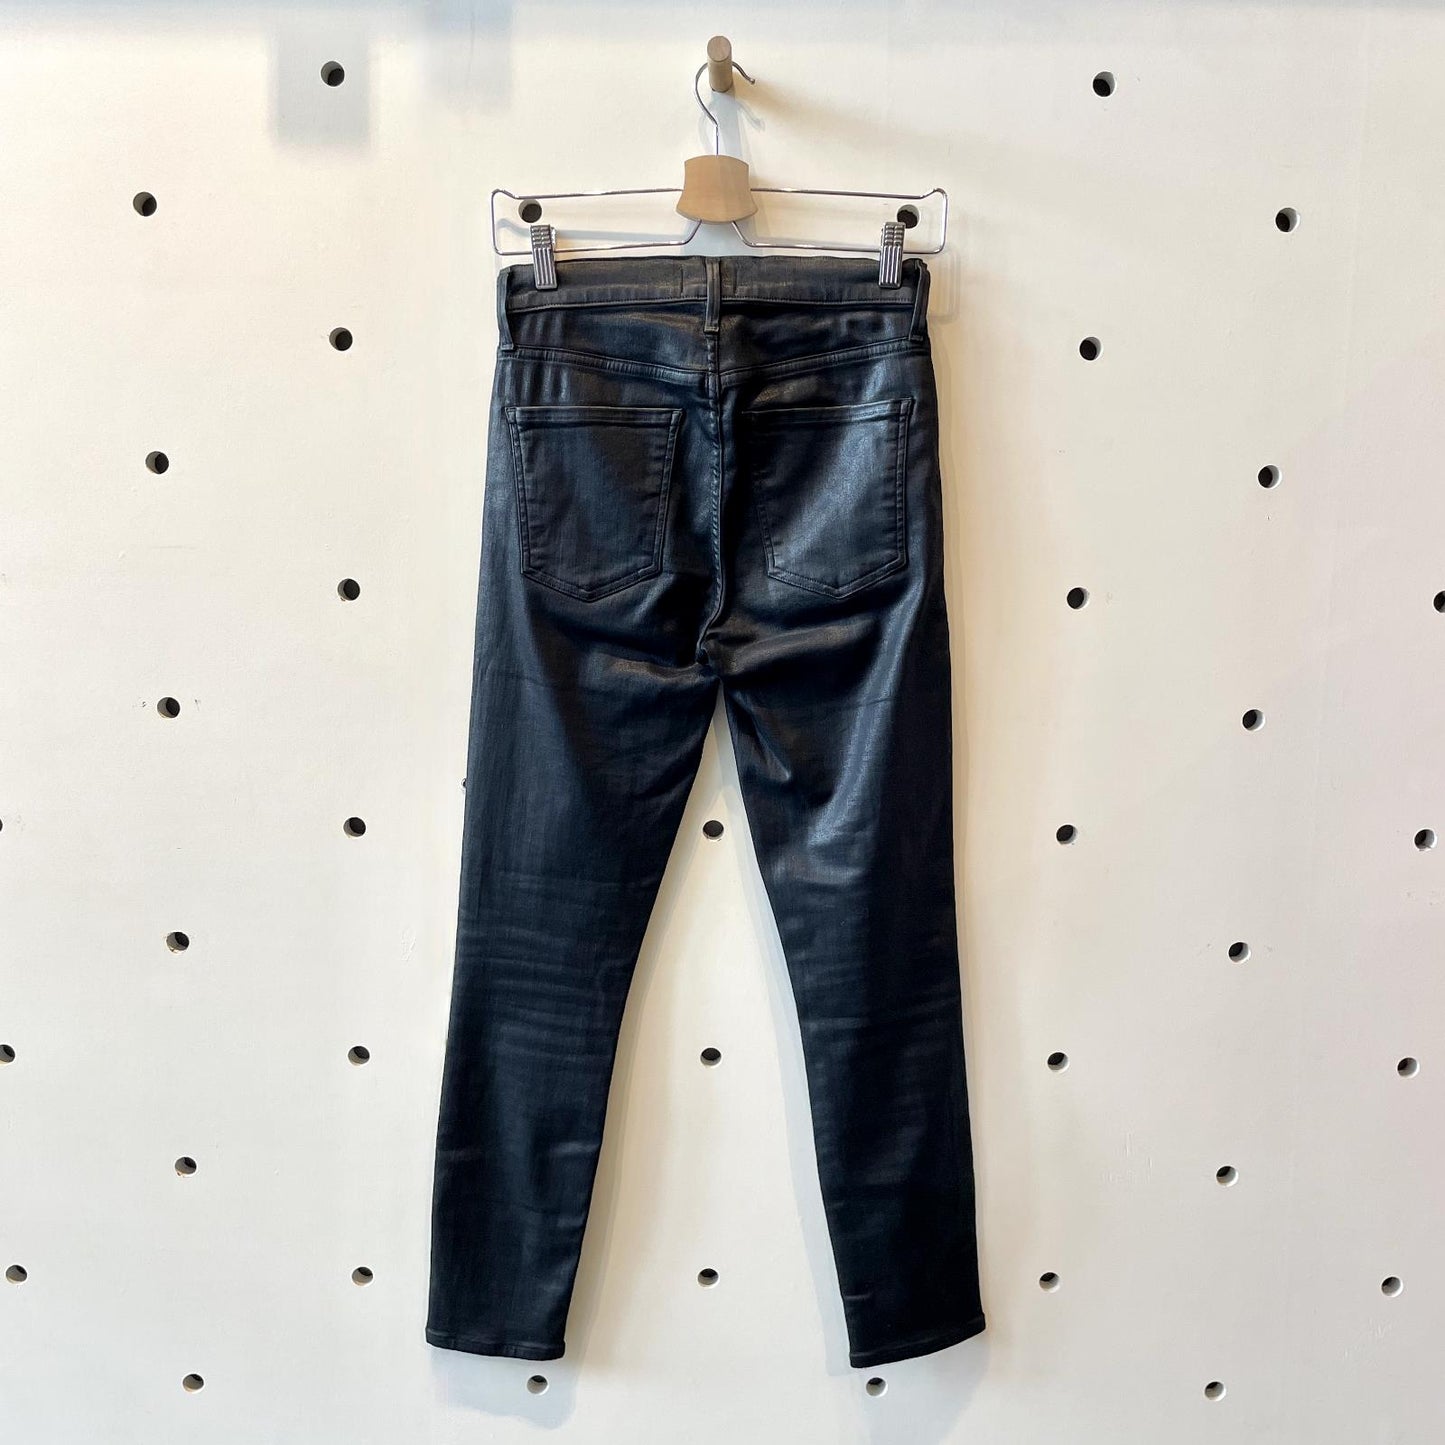 27 - AGOLDE $198 Black Leatherette Sophie High Rise Crop Jeans 0326RS